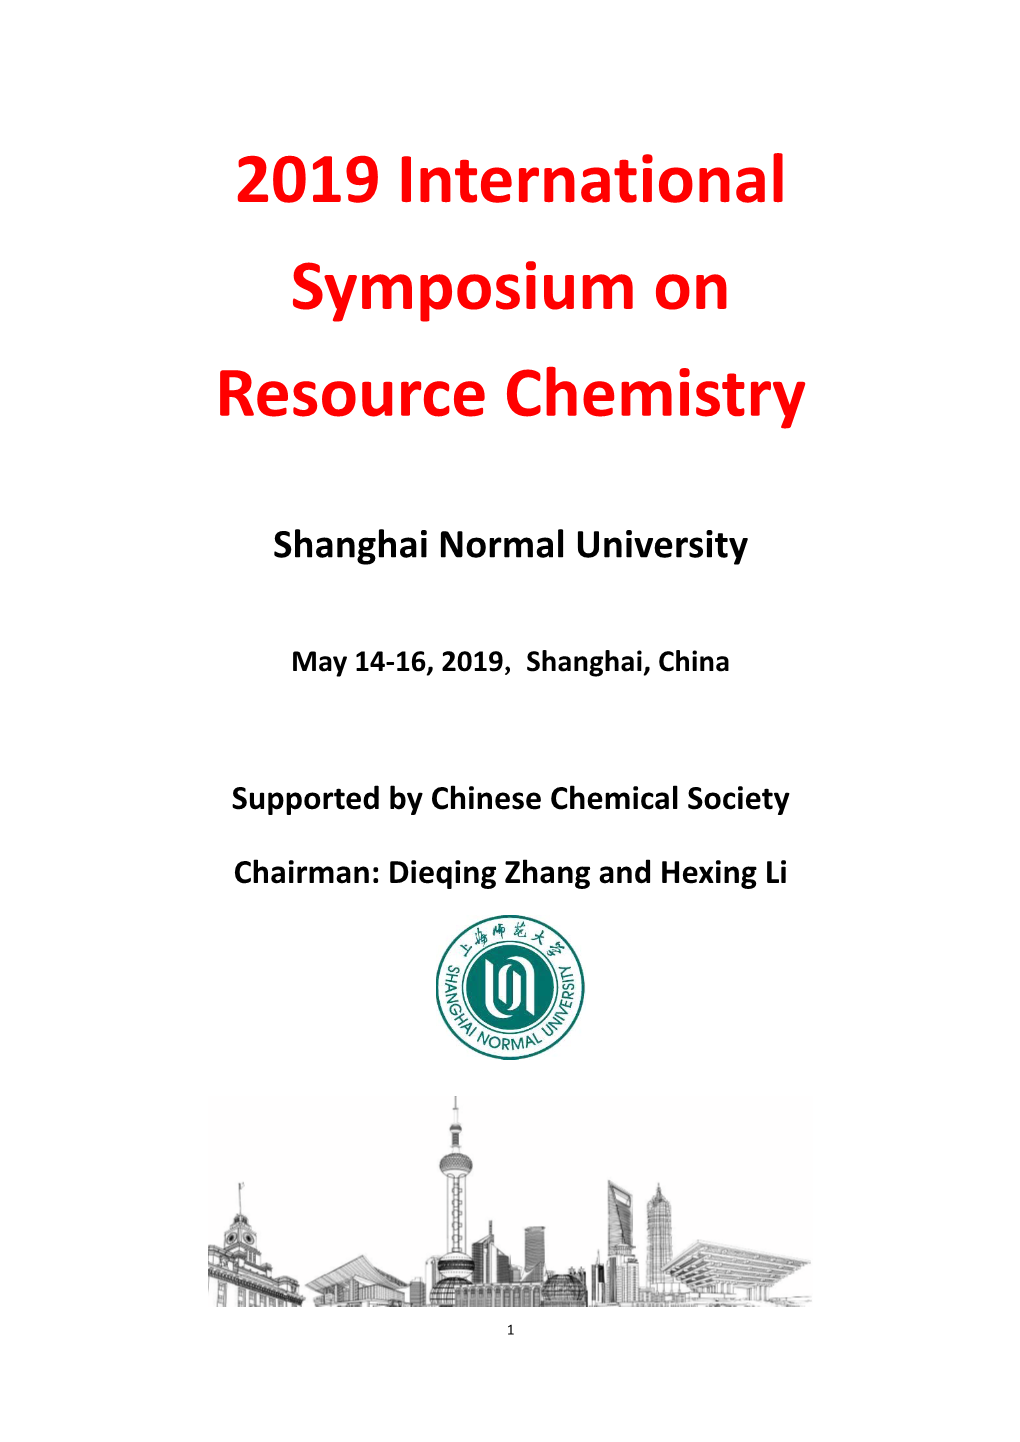 2019 International Symposium on Resource Chemistry